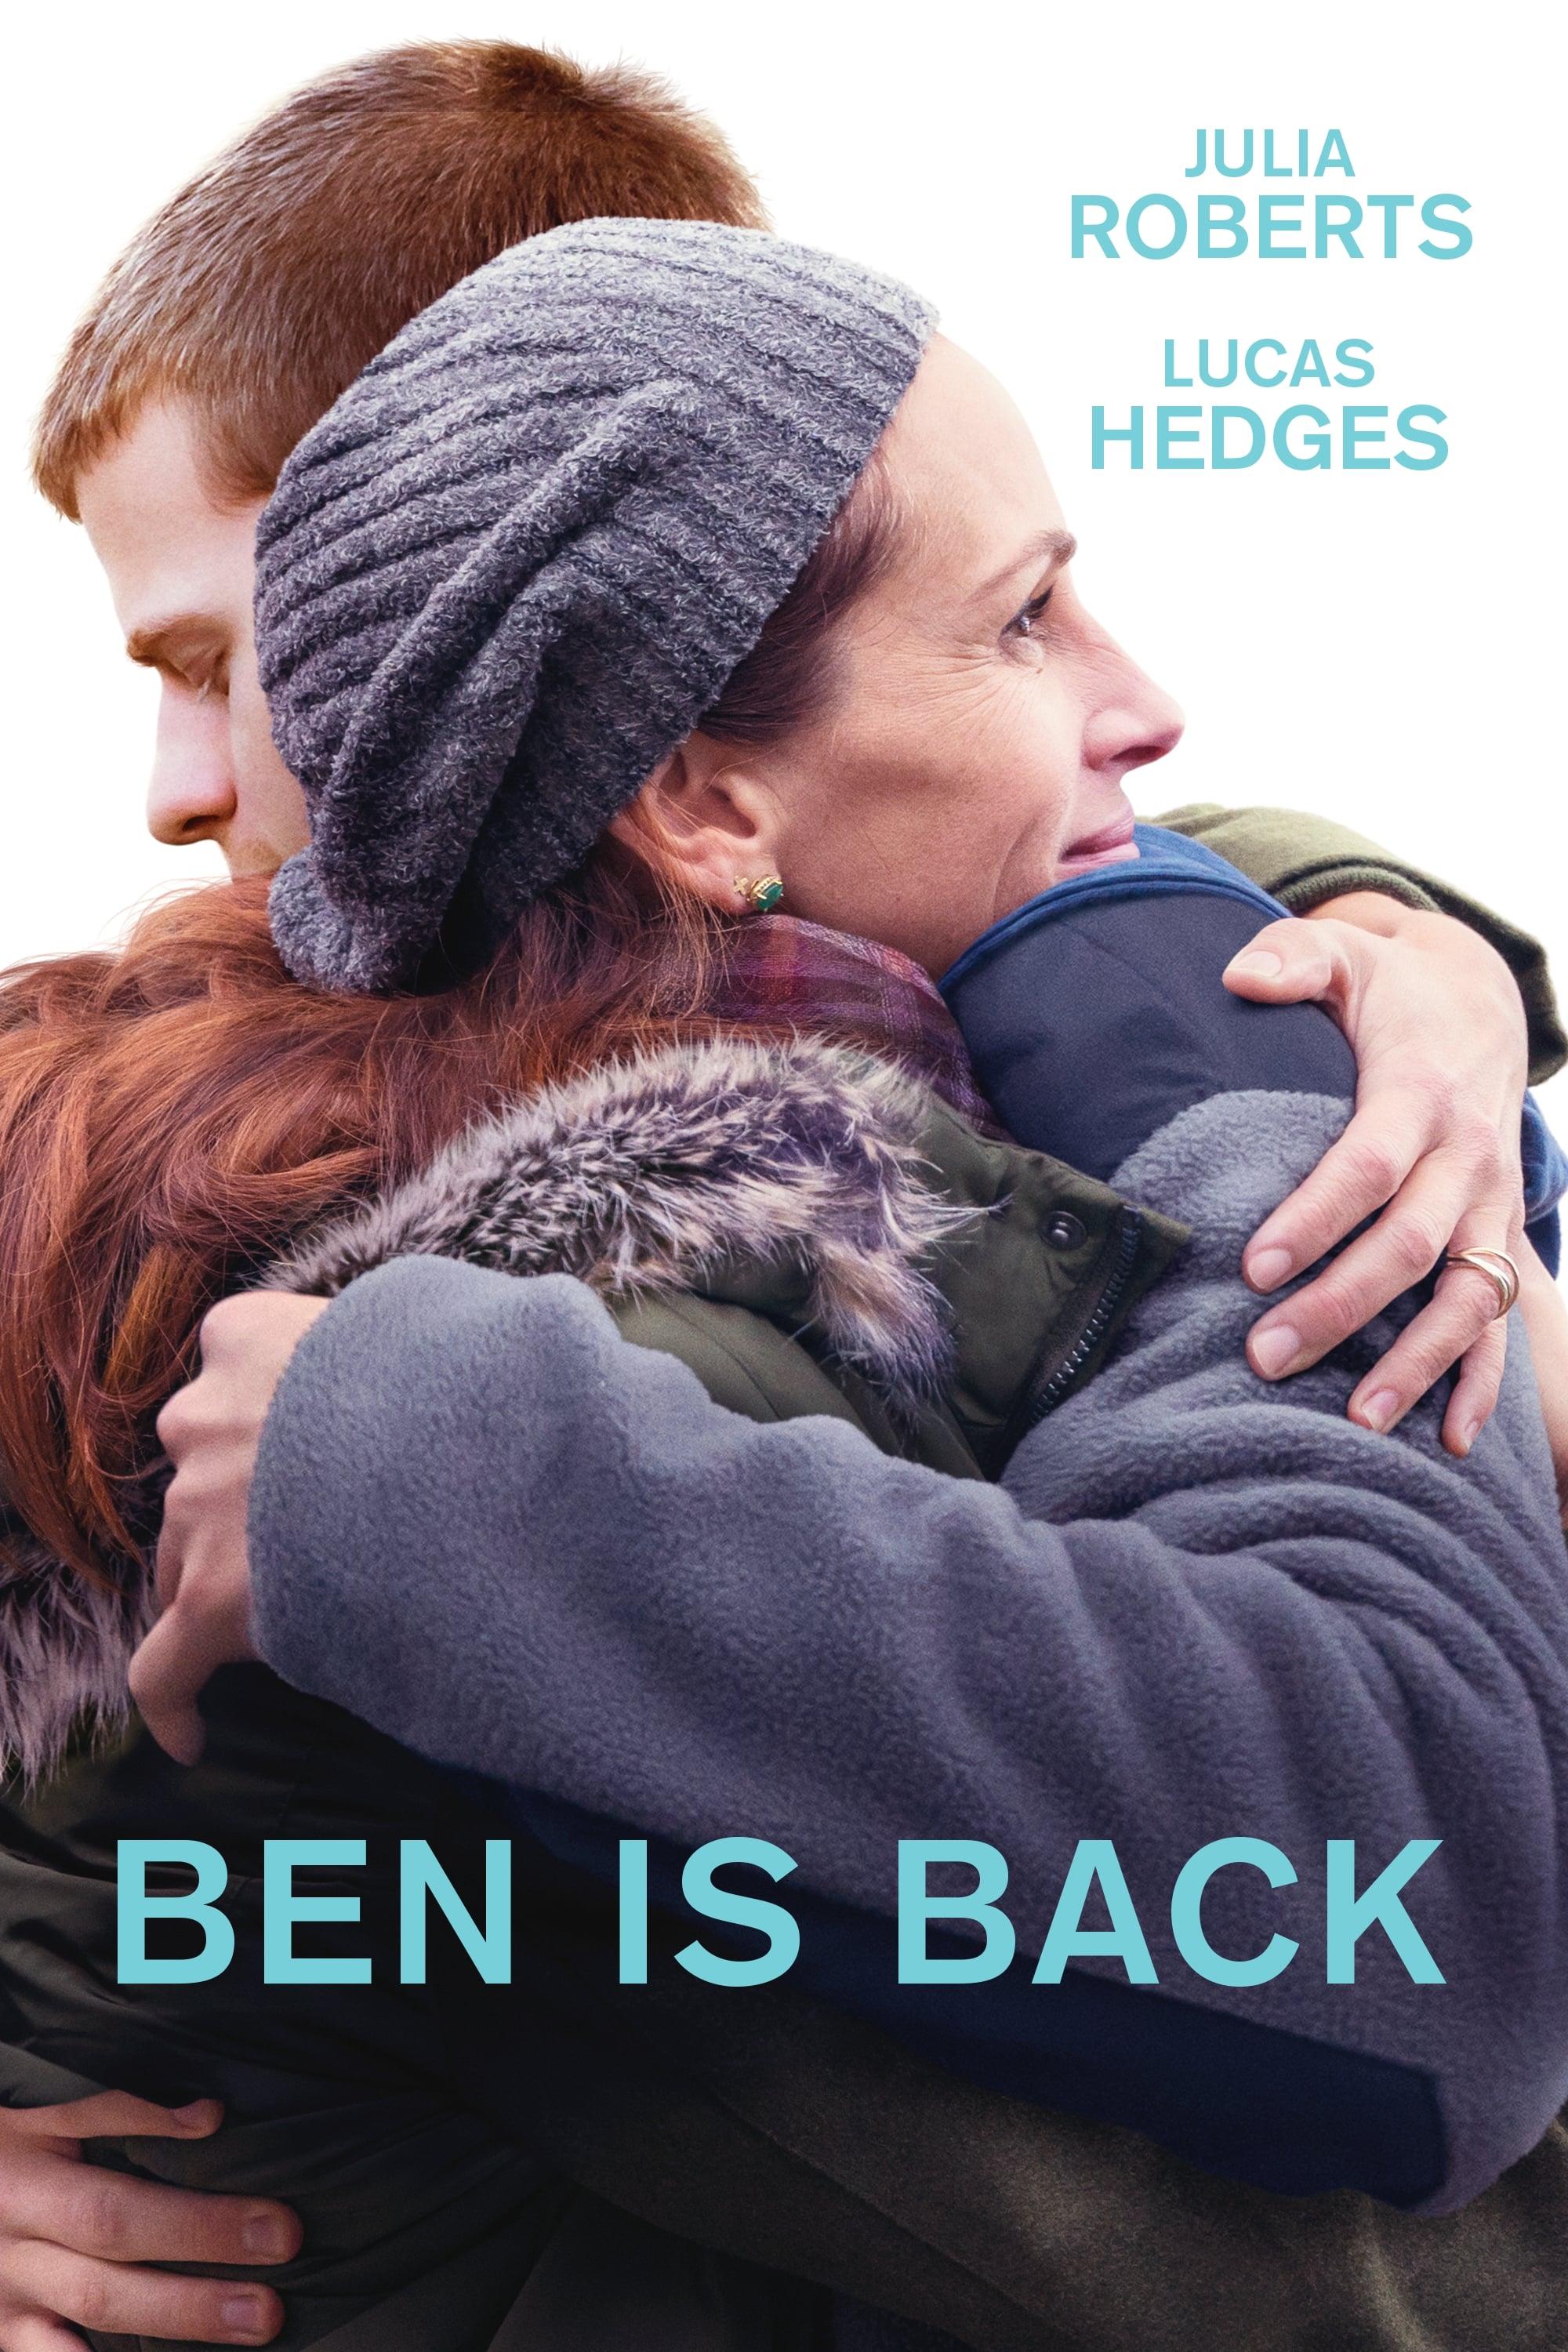 Ben Is Back poster